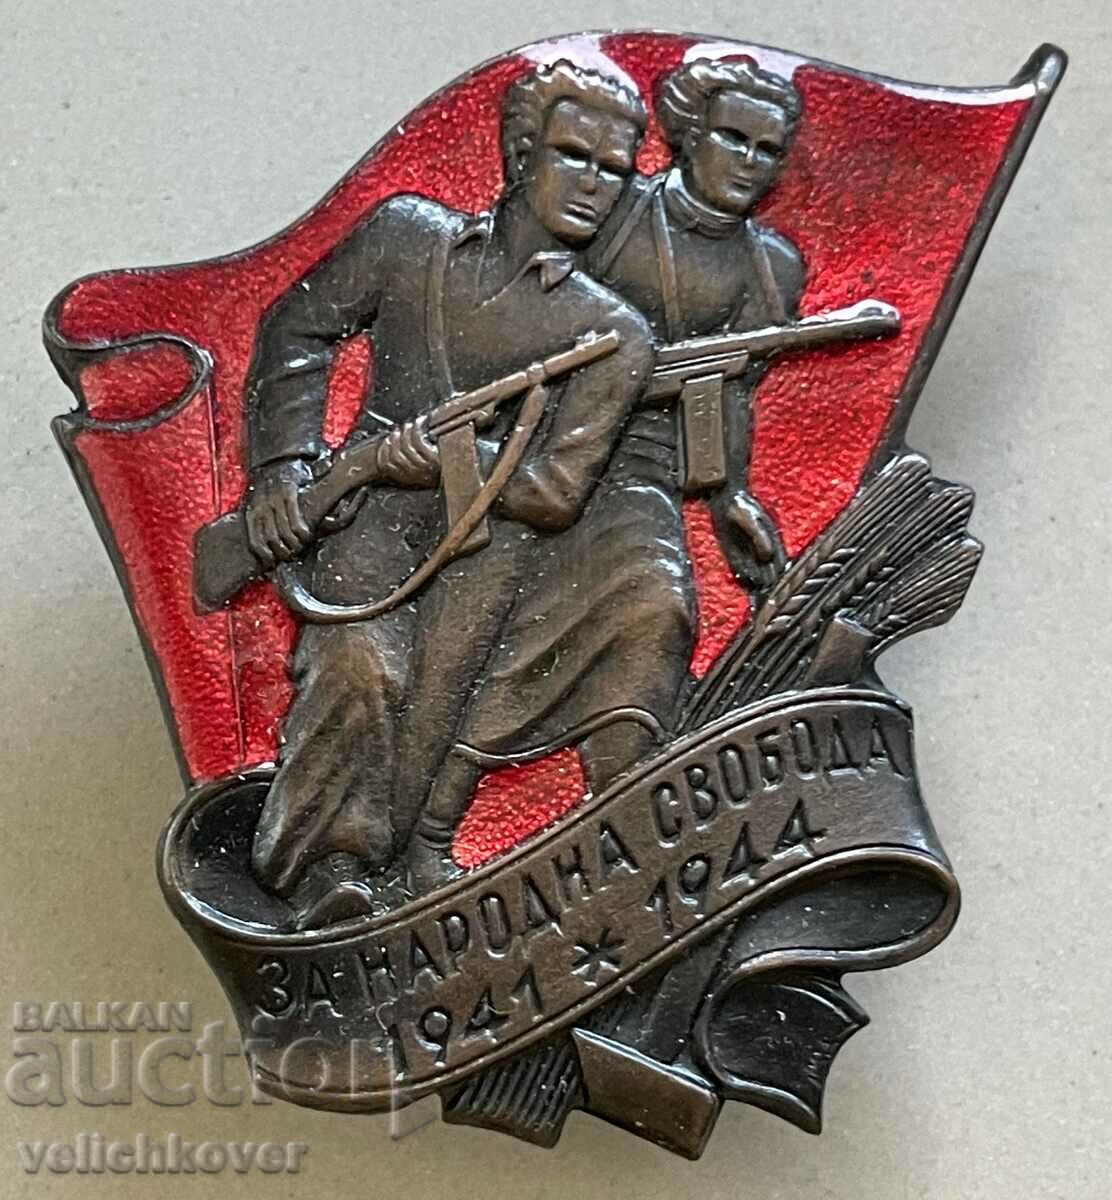 33995 Bulgaria badge For National Freedom partisan badge